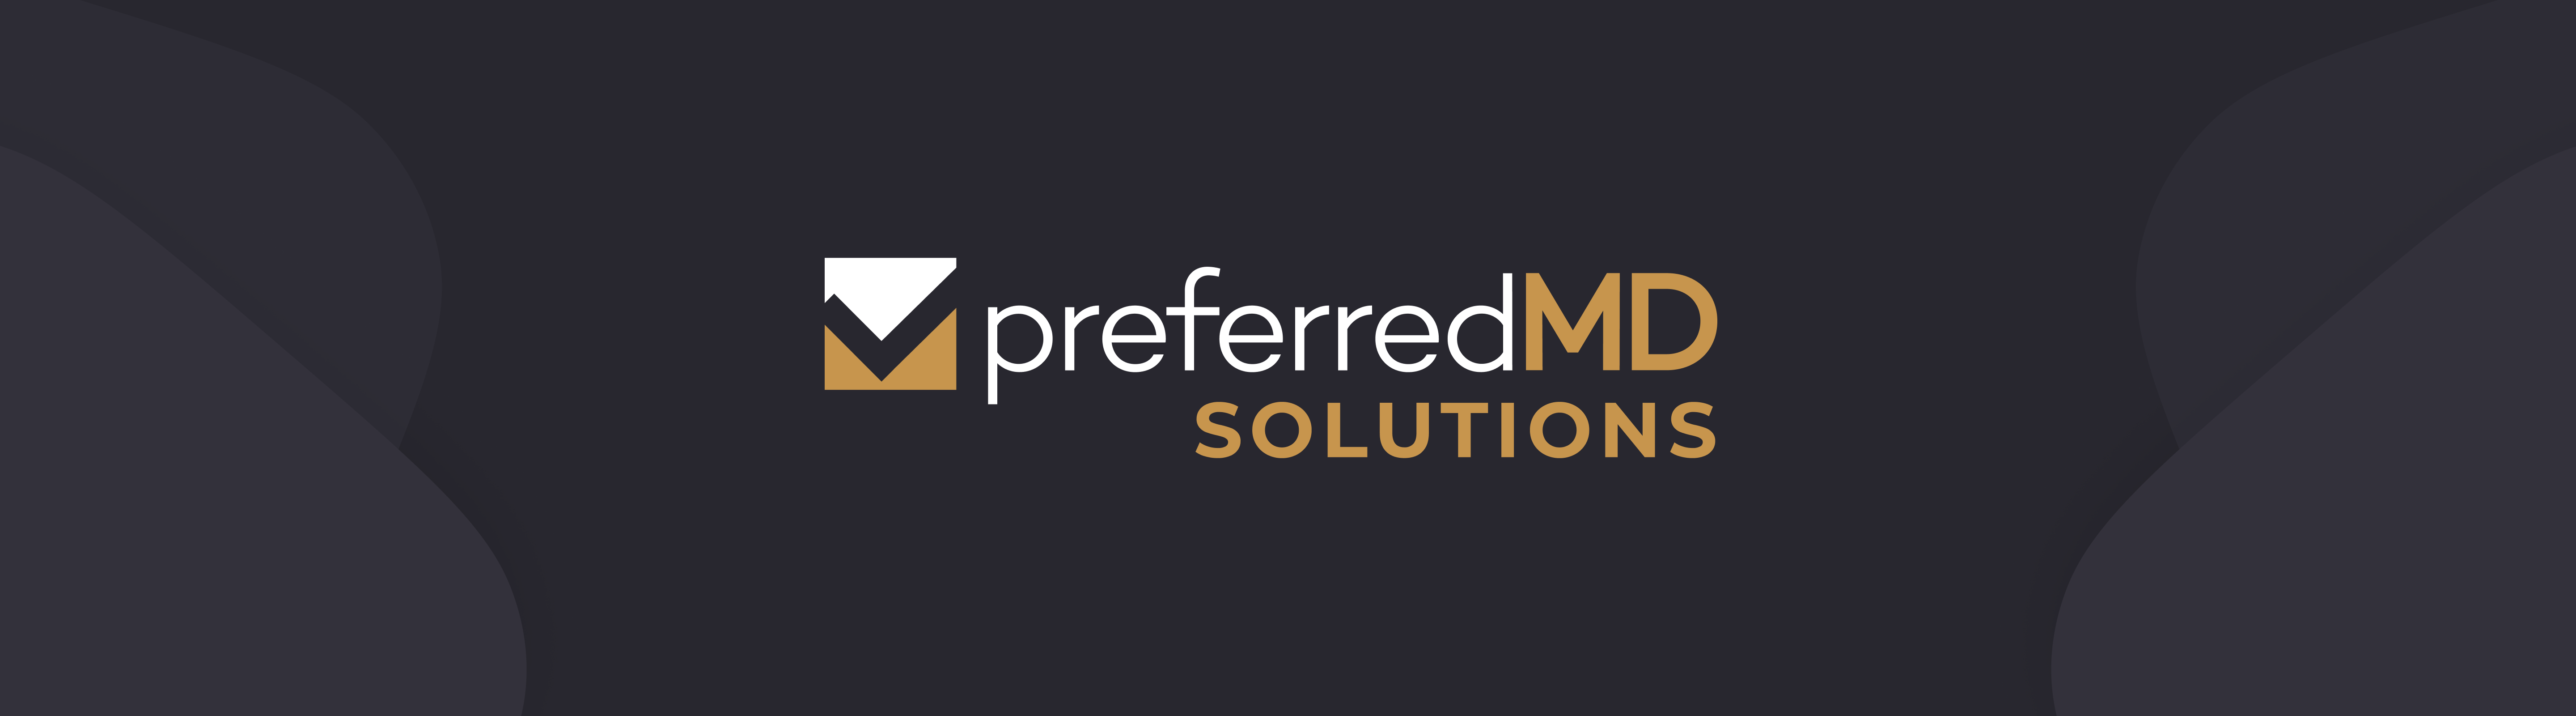 PreferredMD Solutions cover